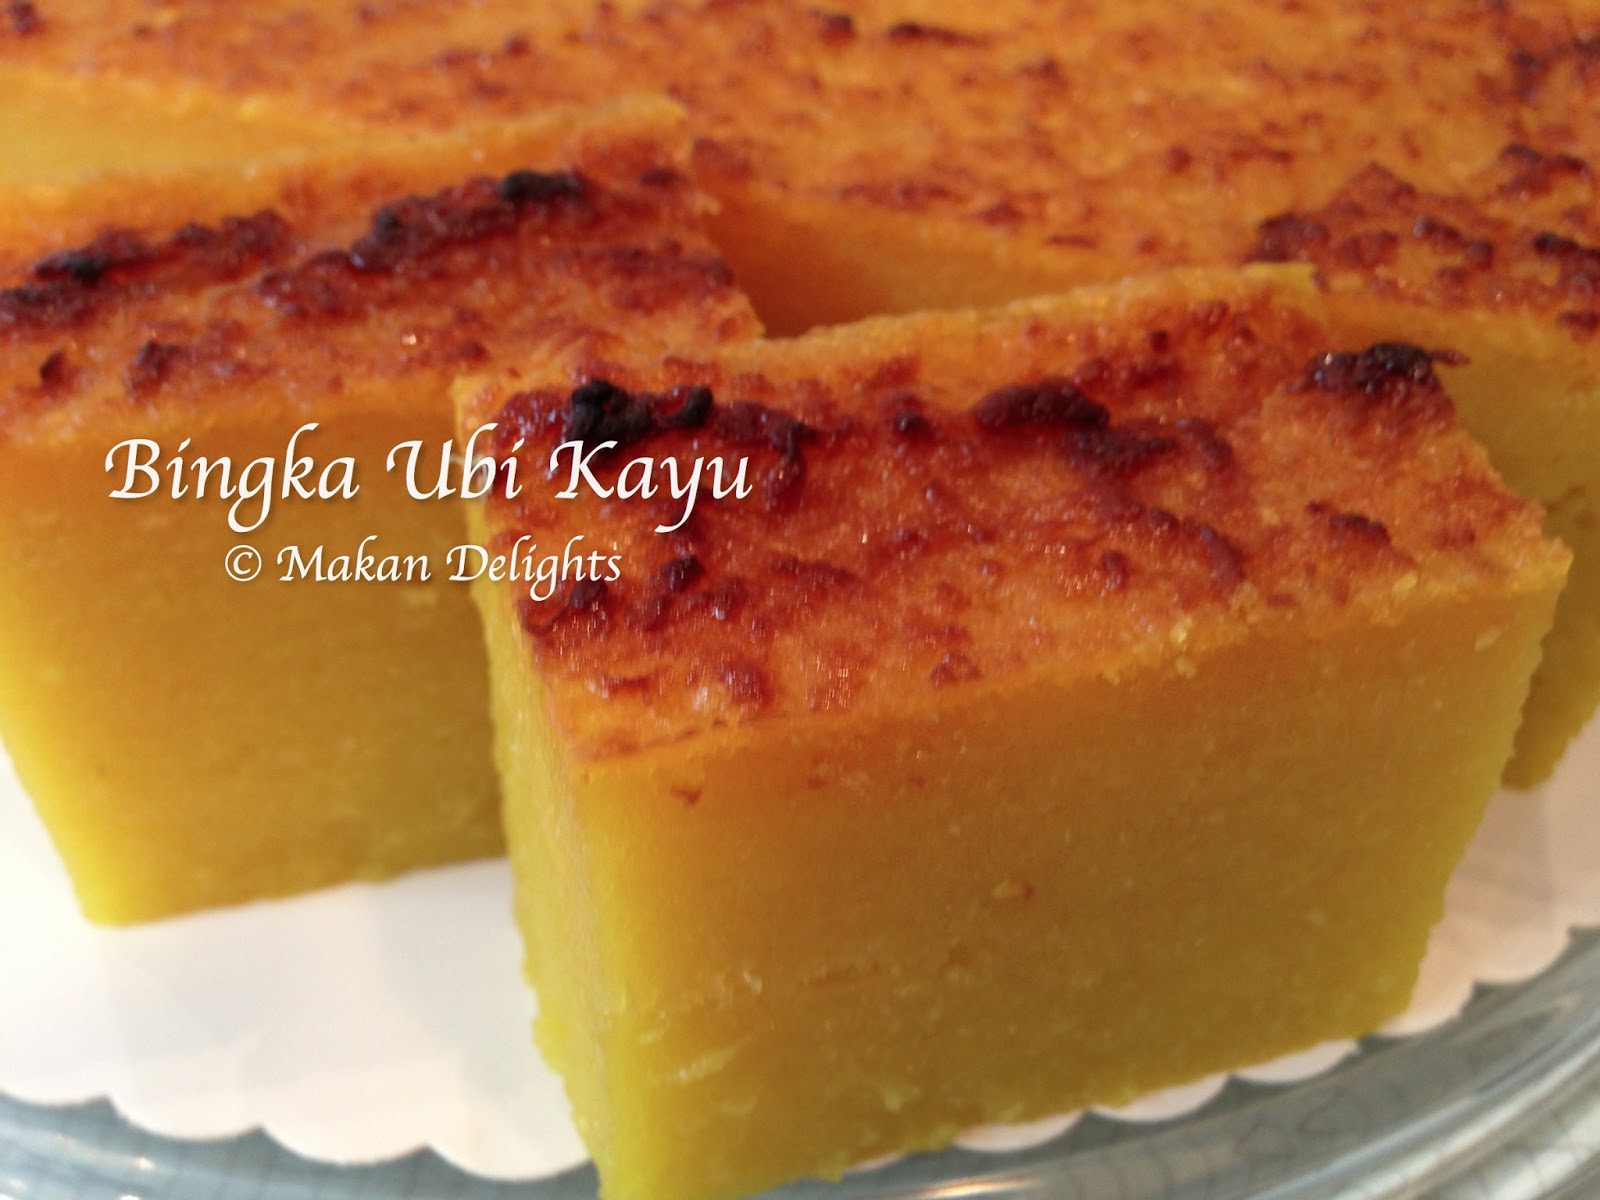 Makan Delights: Bingka Ubi Kayu (Tapioca Cake)